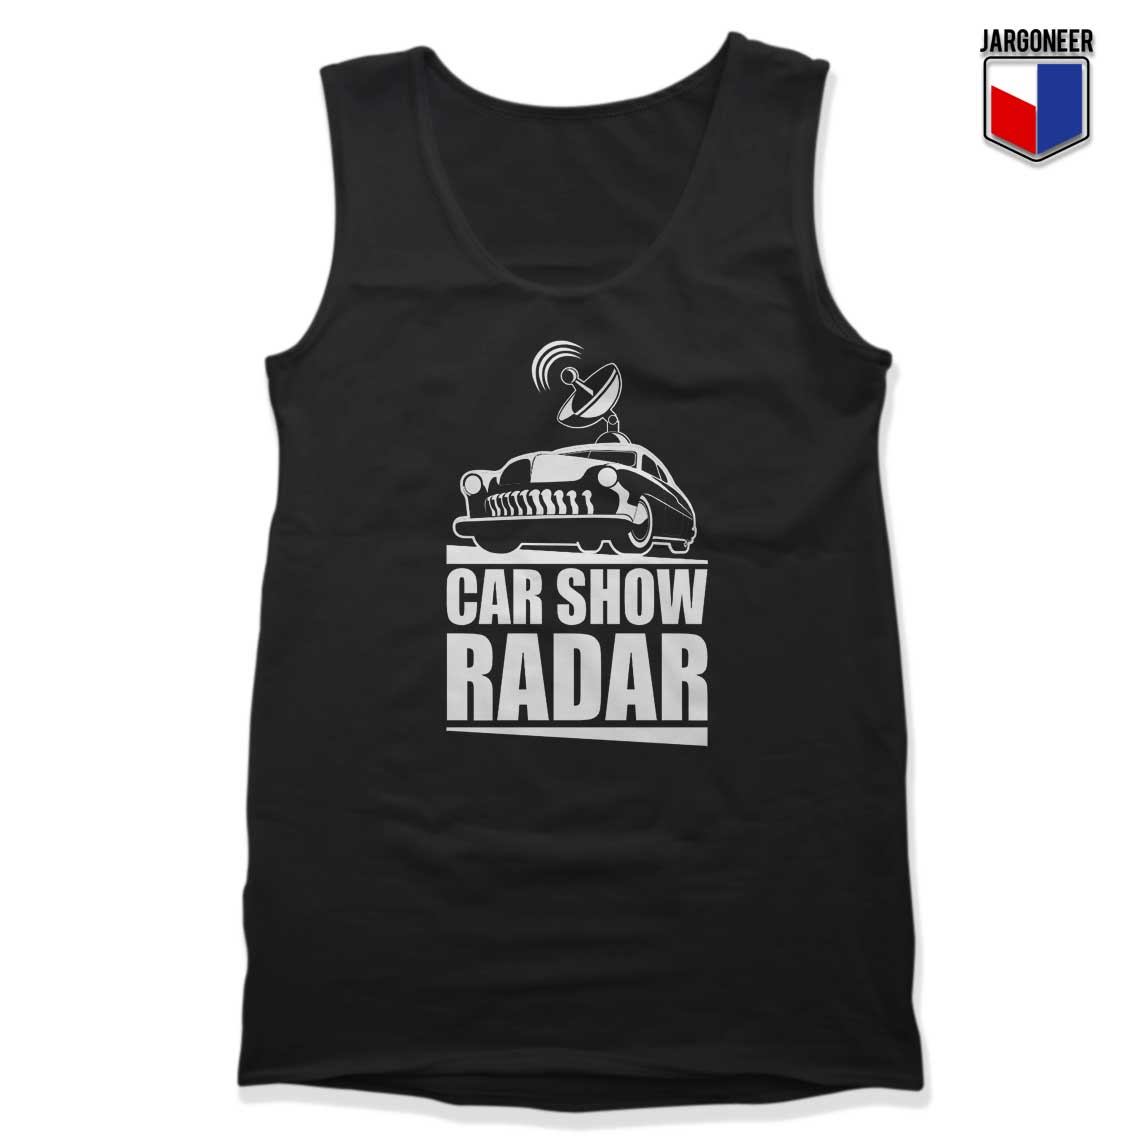 Car Show Radar Tank Top - Shop Unique Graphic Cool Shirt Designs